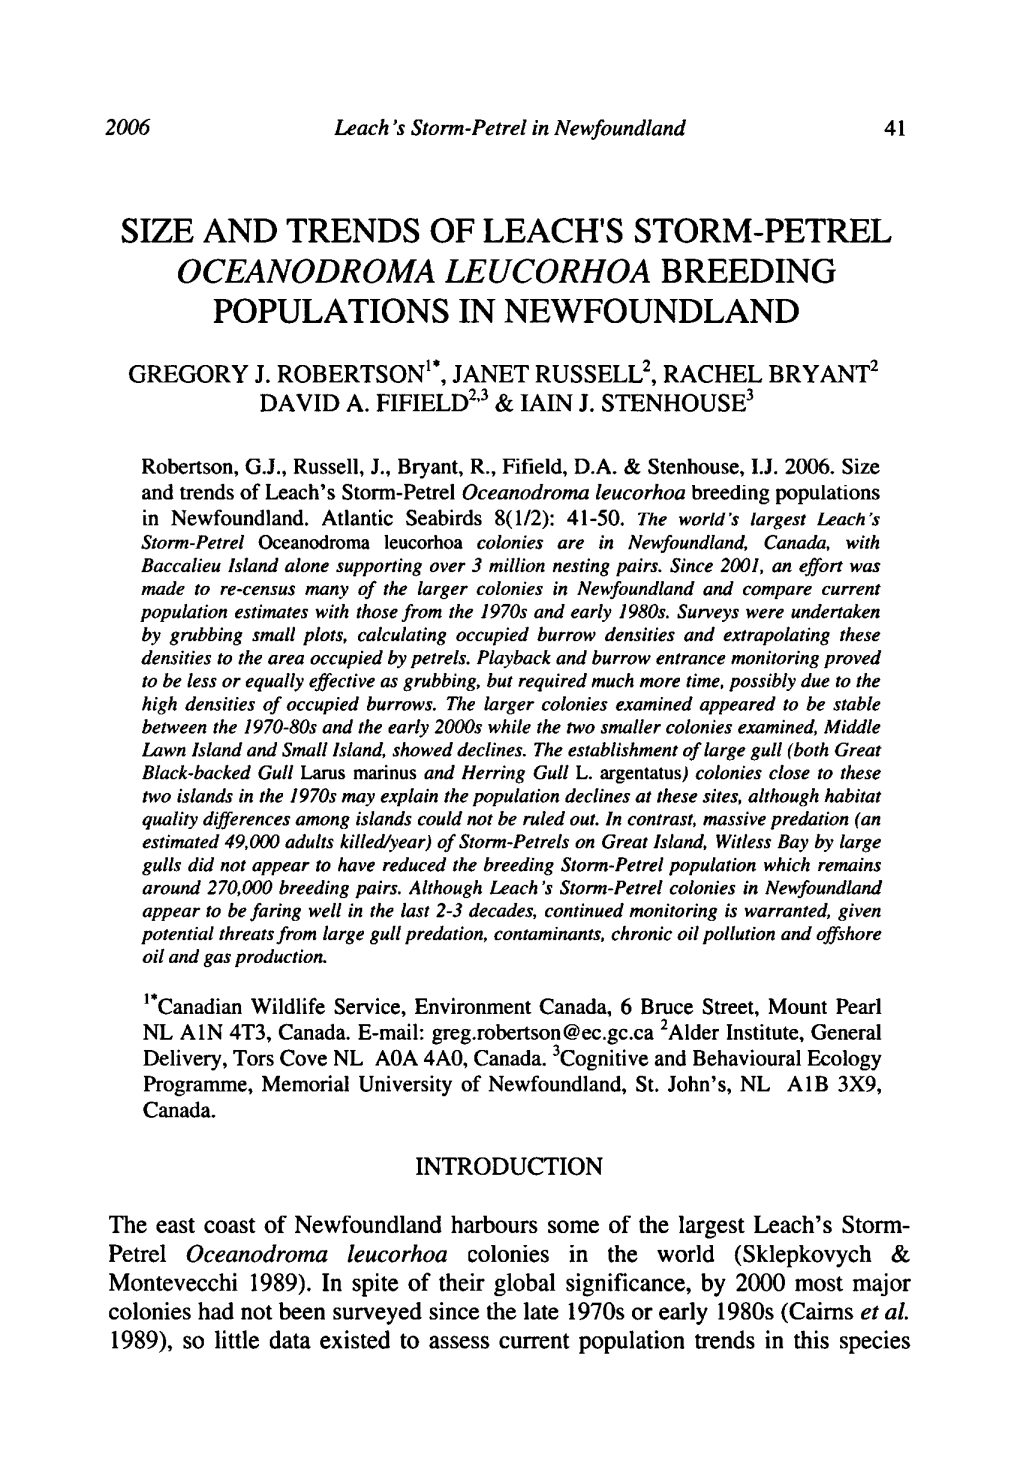 Size and Trends of Leach's Storm-Petrel Oceanodroma Leucorhoa Breeding Population in Newfoundland